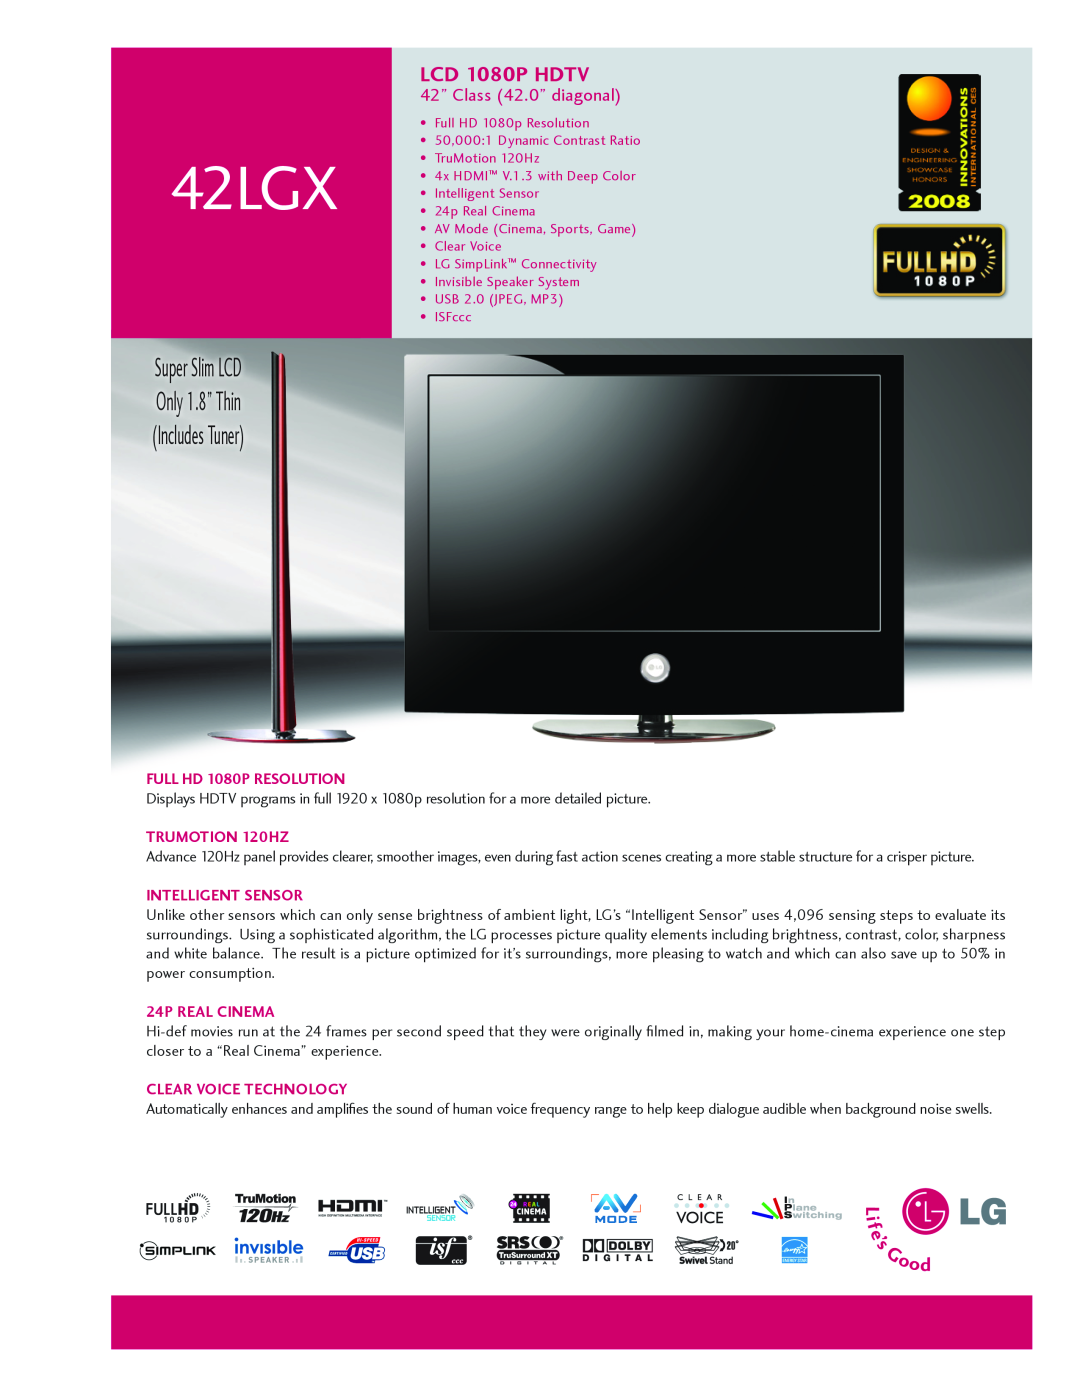 LG Electronics 42X manual LCD 1080p HDTV, 42” Class 42.0” diagonal, 42LGX, Full HD 1080p Resolution, TruMotion 120Hz 